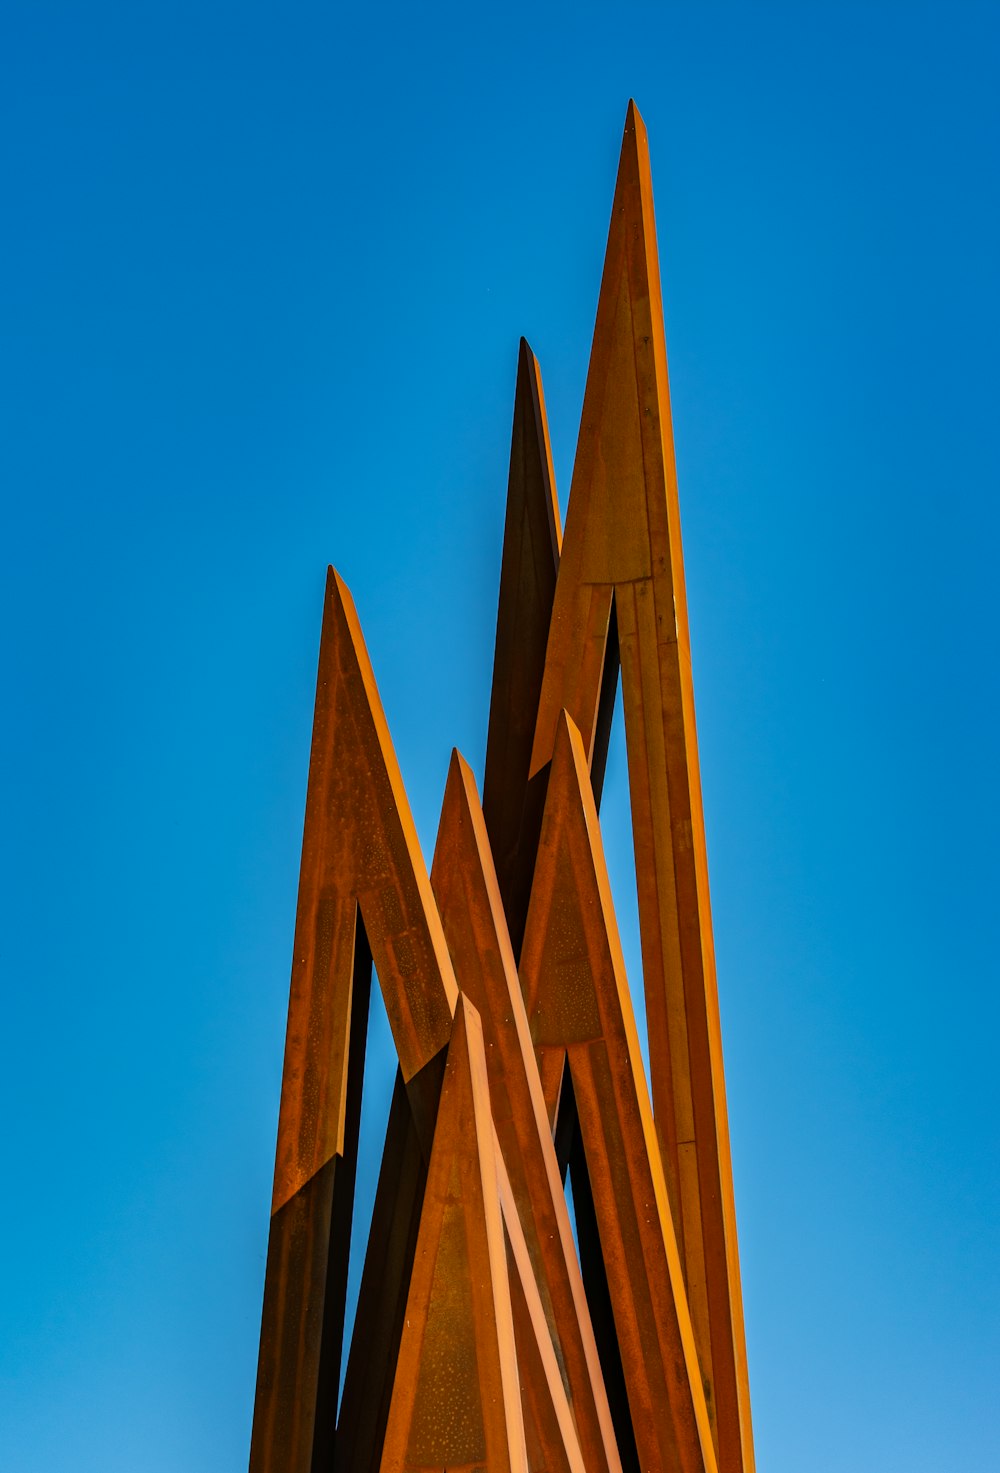 wooden brown triangular tool